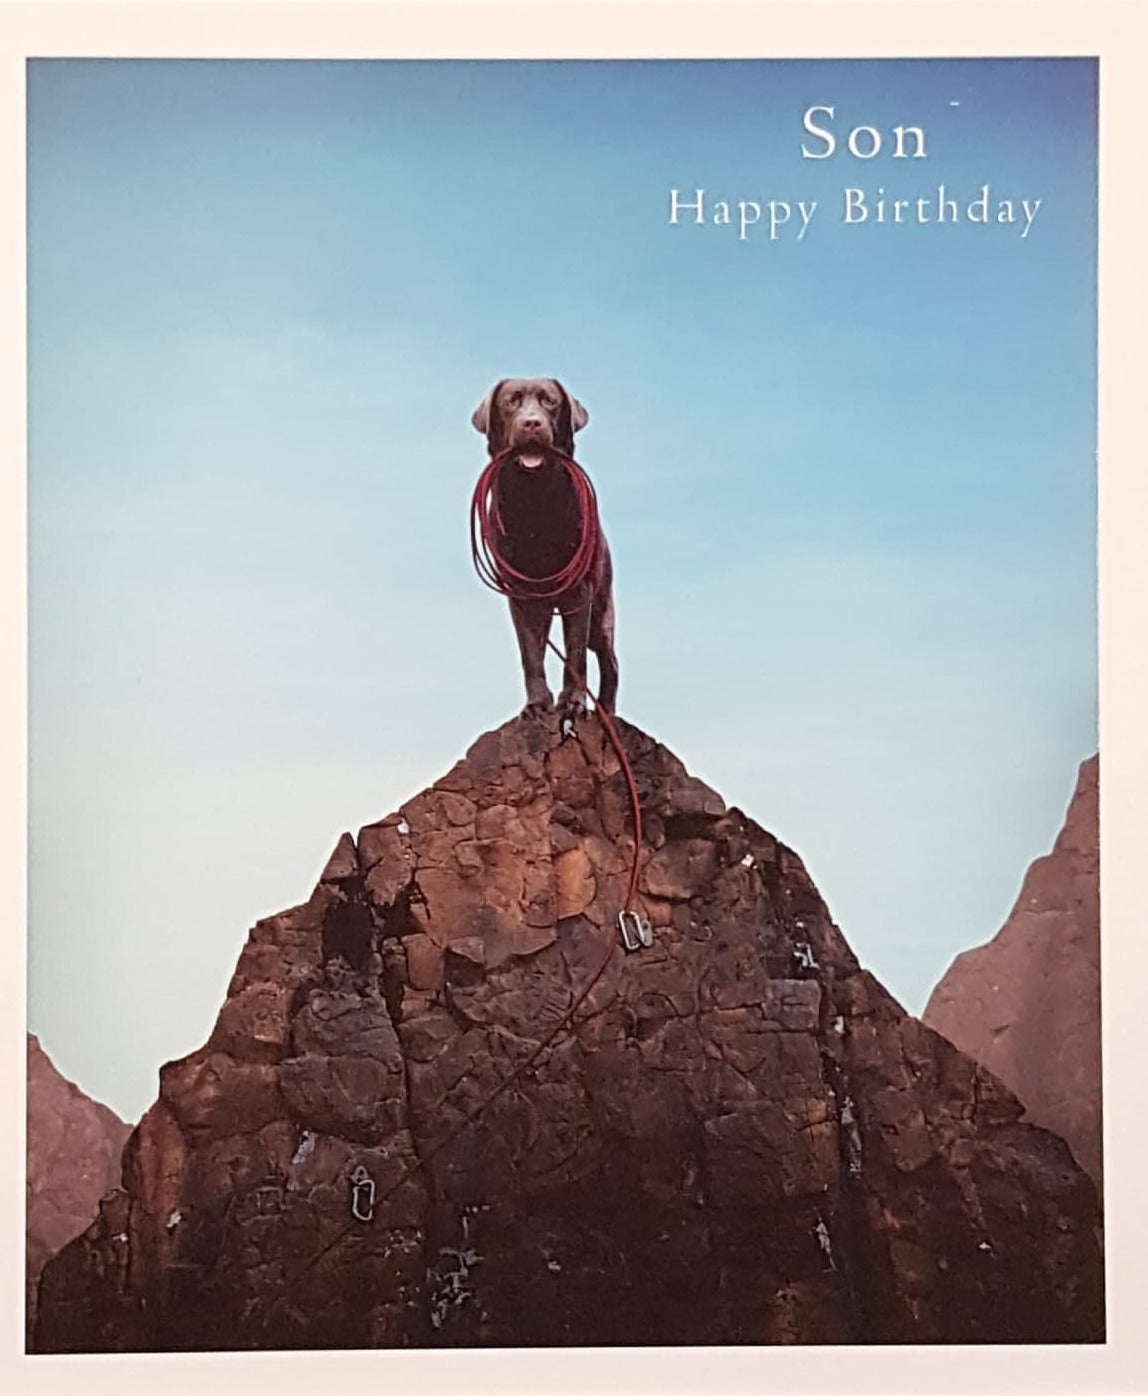 Birthday Card - Son / A Brown Dog On A Hill